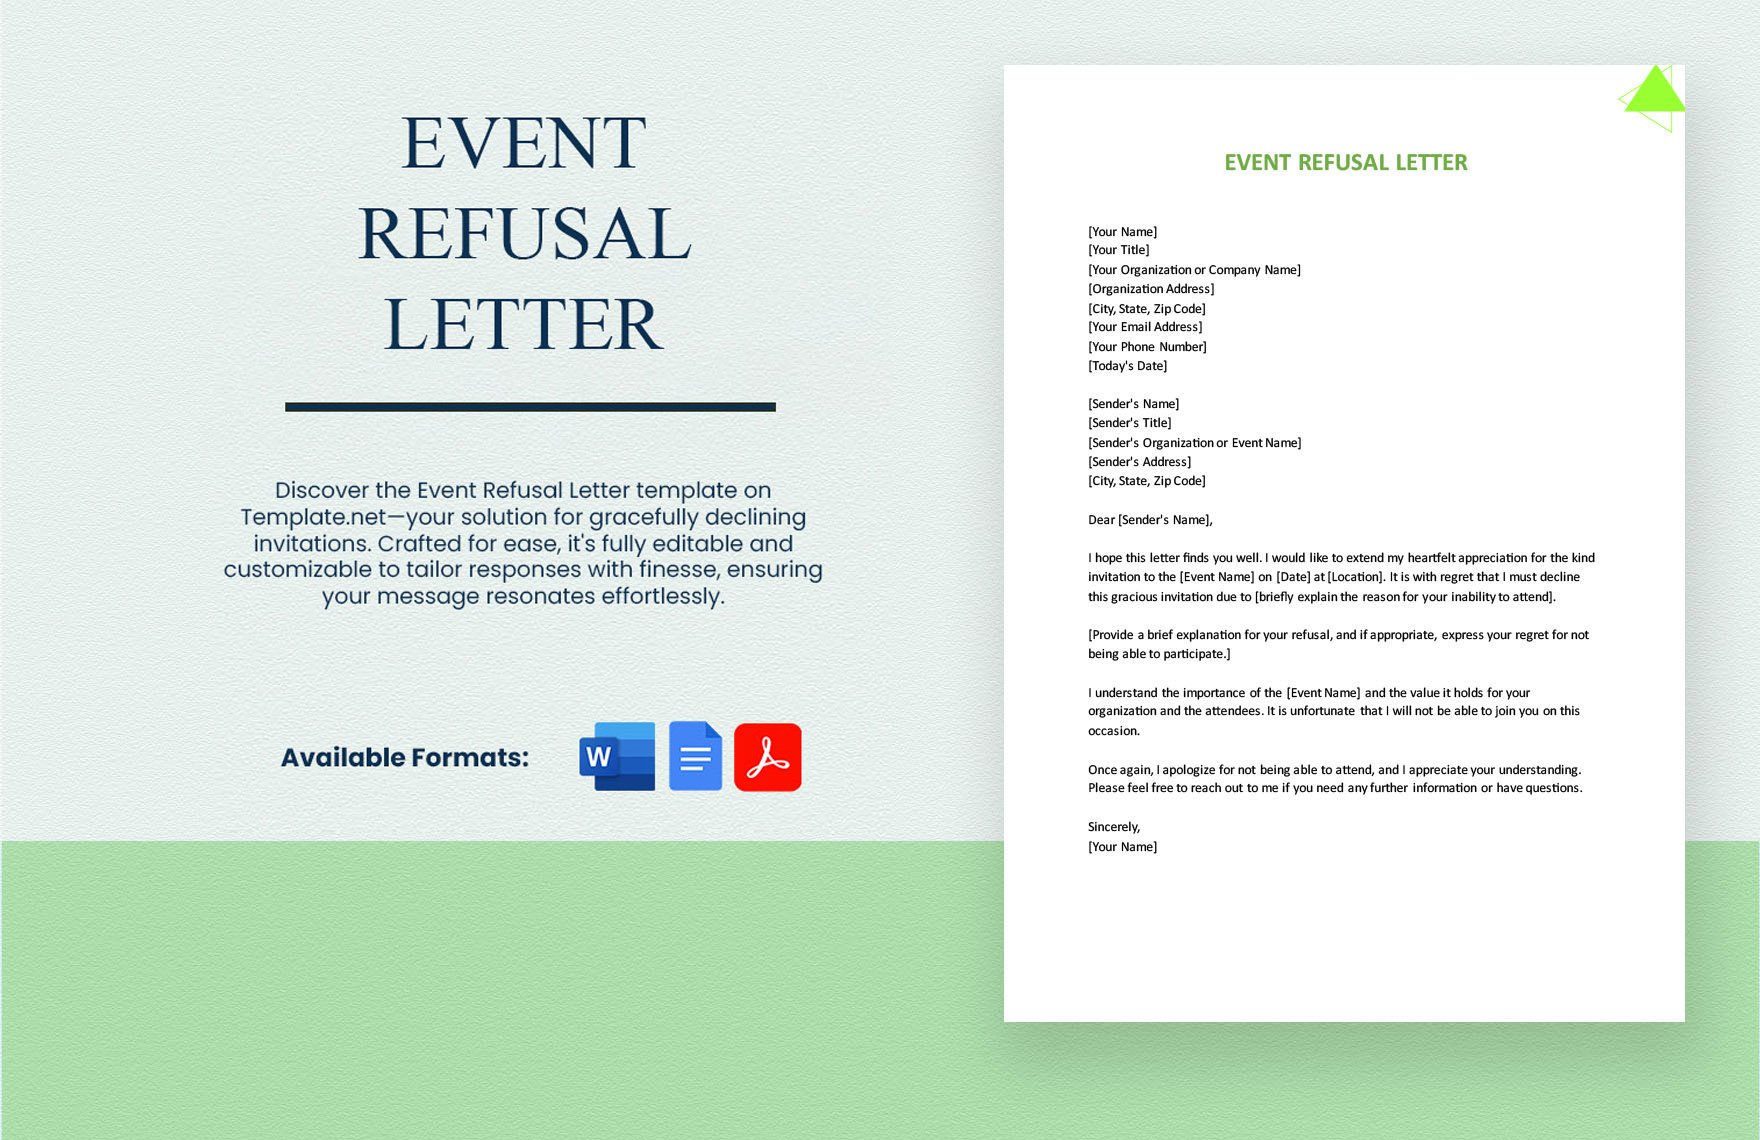 Event Refusal Letter in Word, Google Docs, PDF